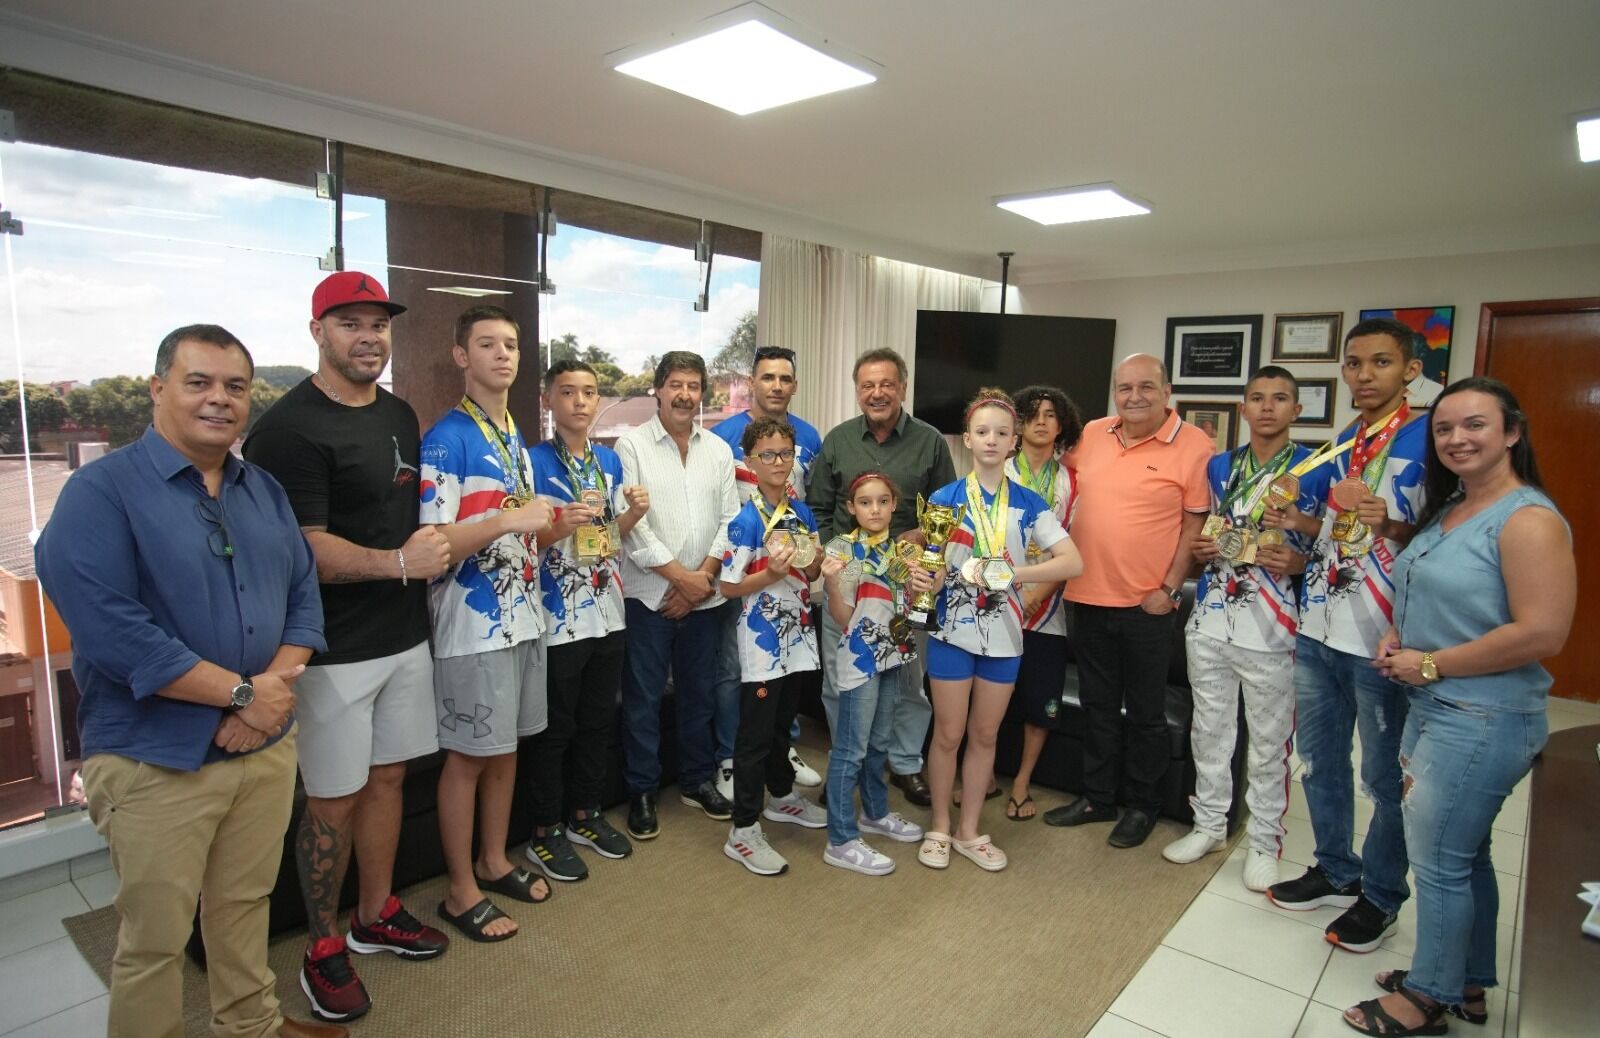 Oito atletas do Taekwondo de Catalão conquistam índices para o Panamericano e Open Rio Internacional